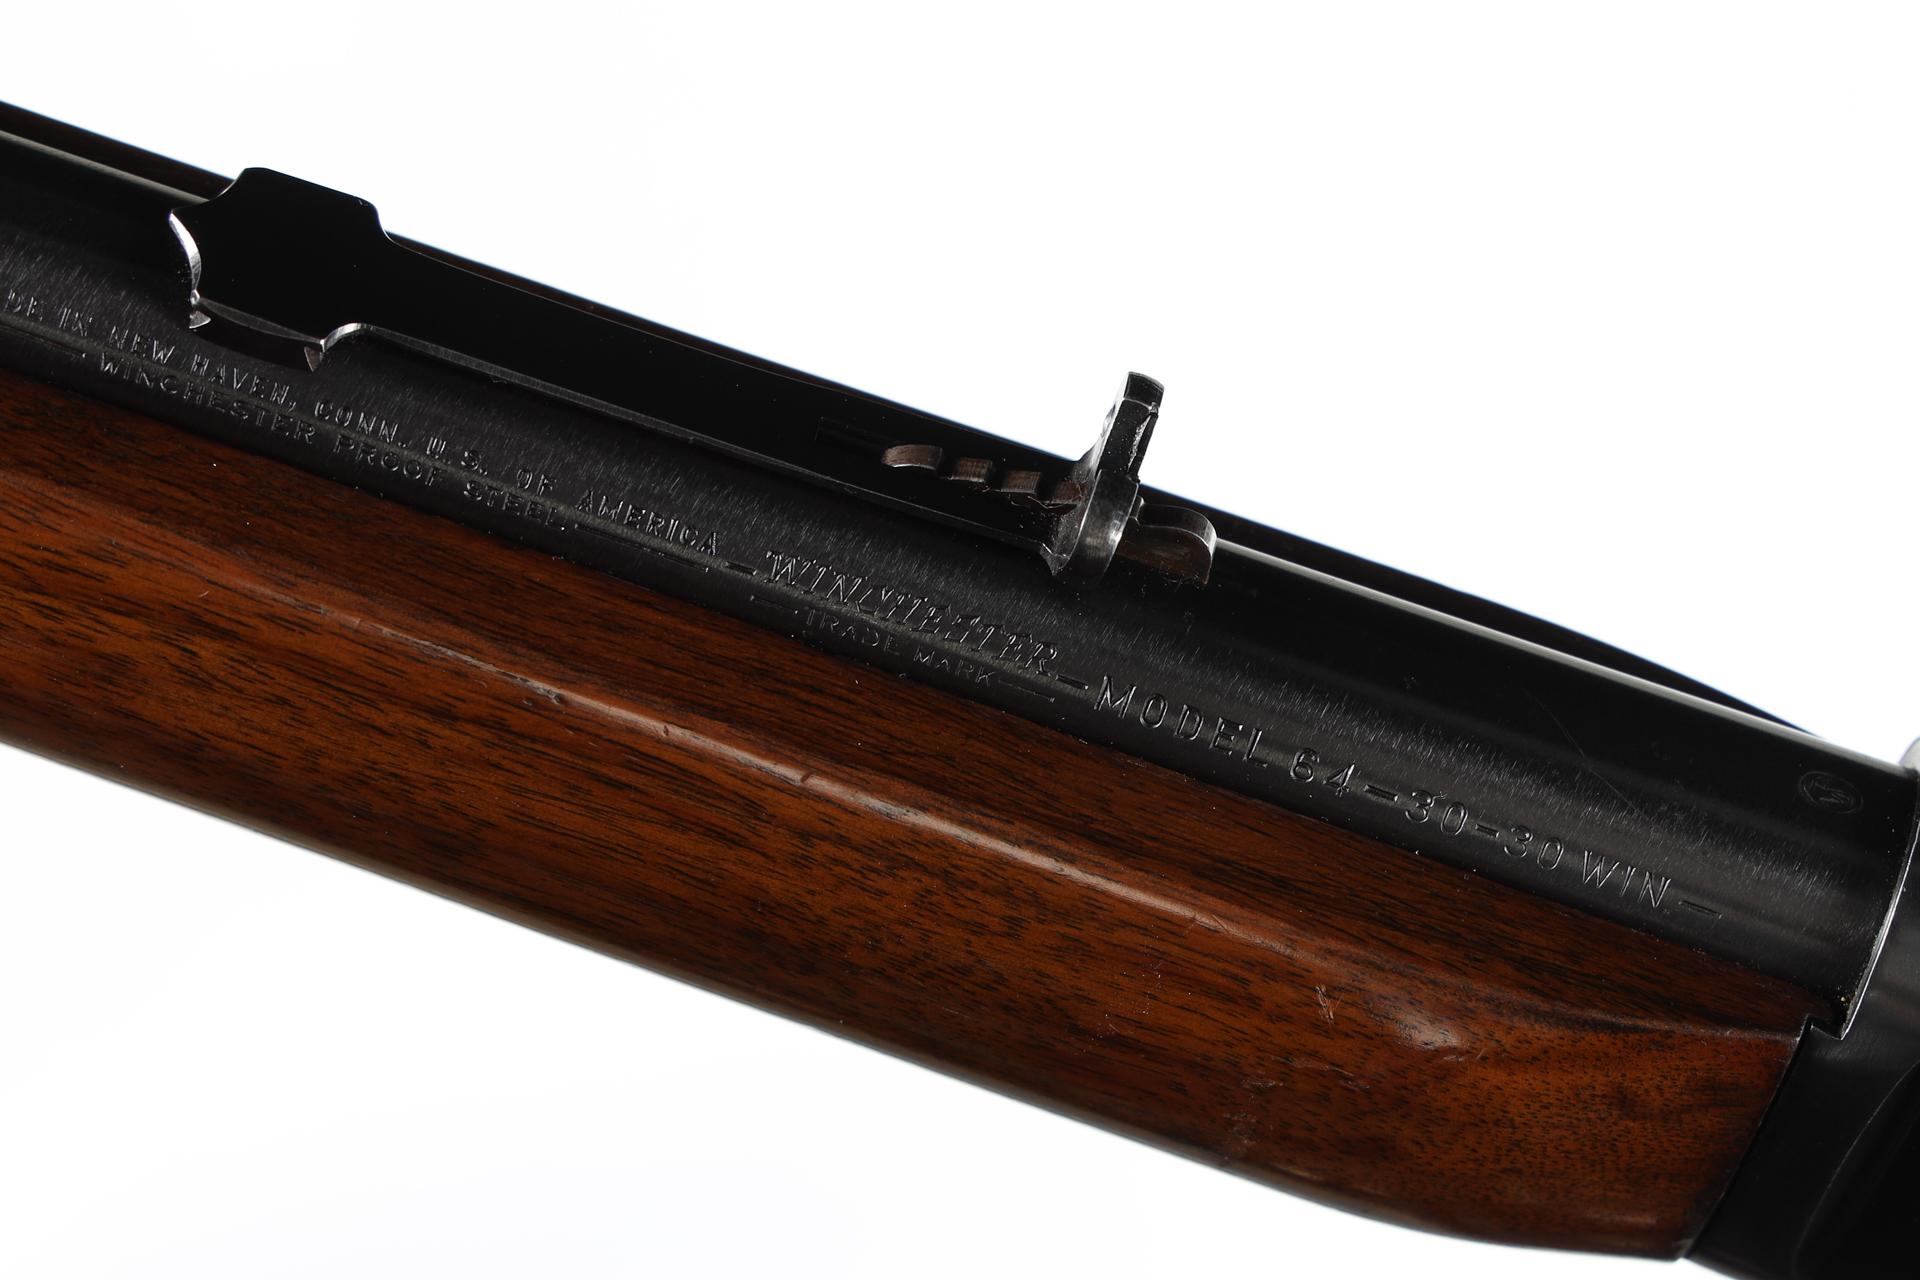 Winchester 64 Lever Rifle .30-30 Win